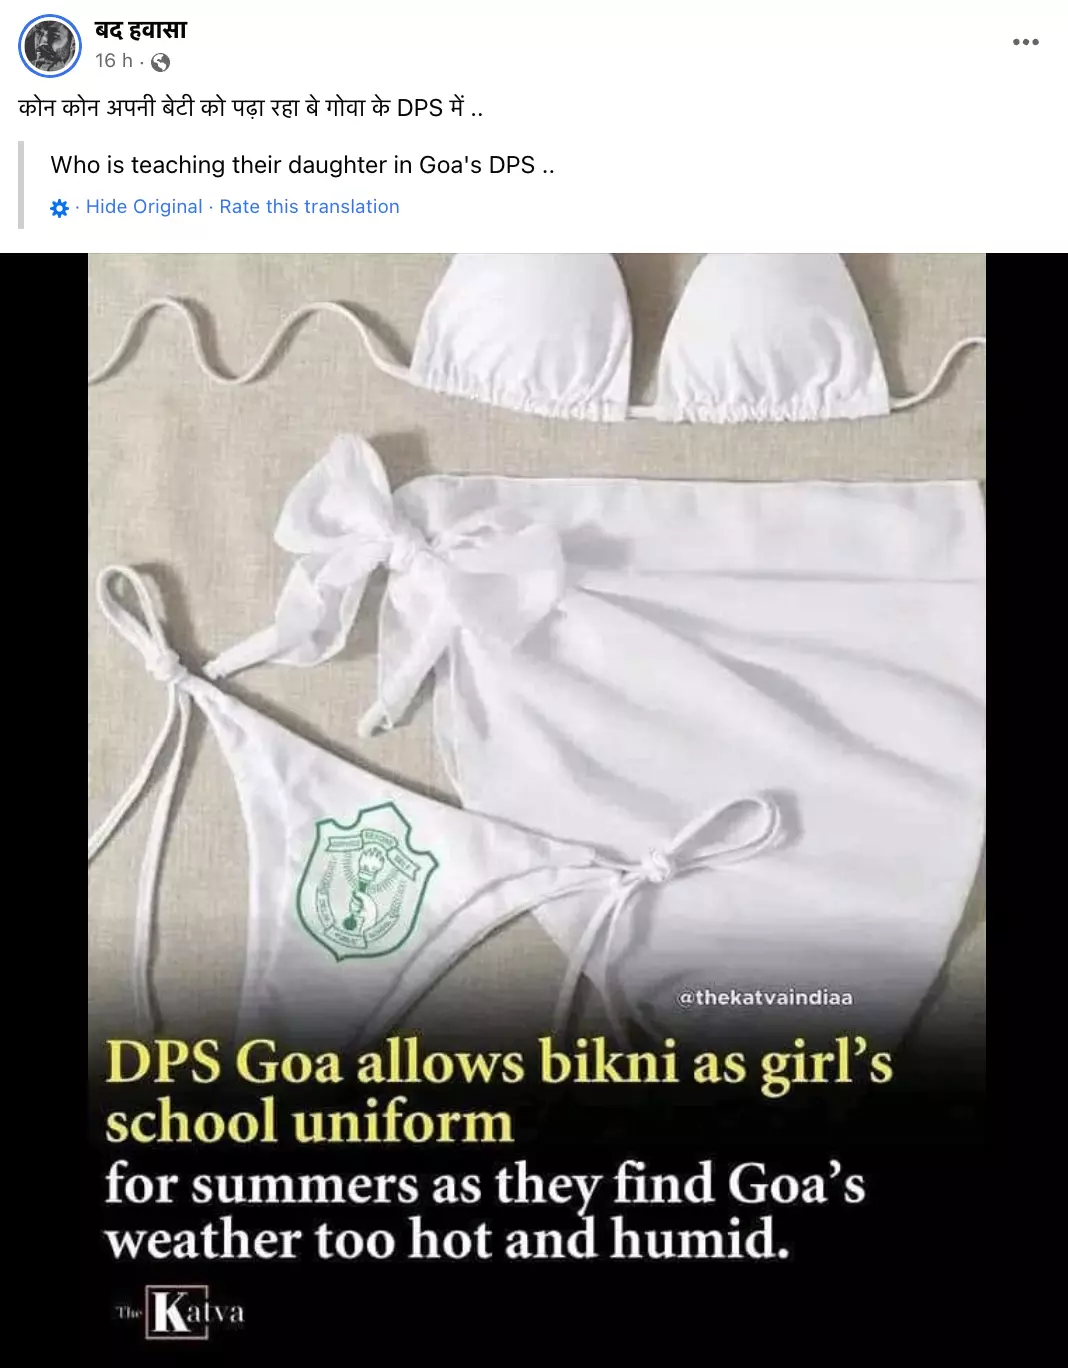 Delhi Girl School Xxx Vid - Viral Post Claiming DPS Goa Allows Girls To Wear Bikini In School Is Satire  | BOOM